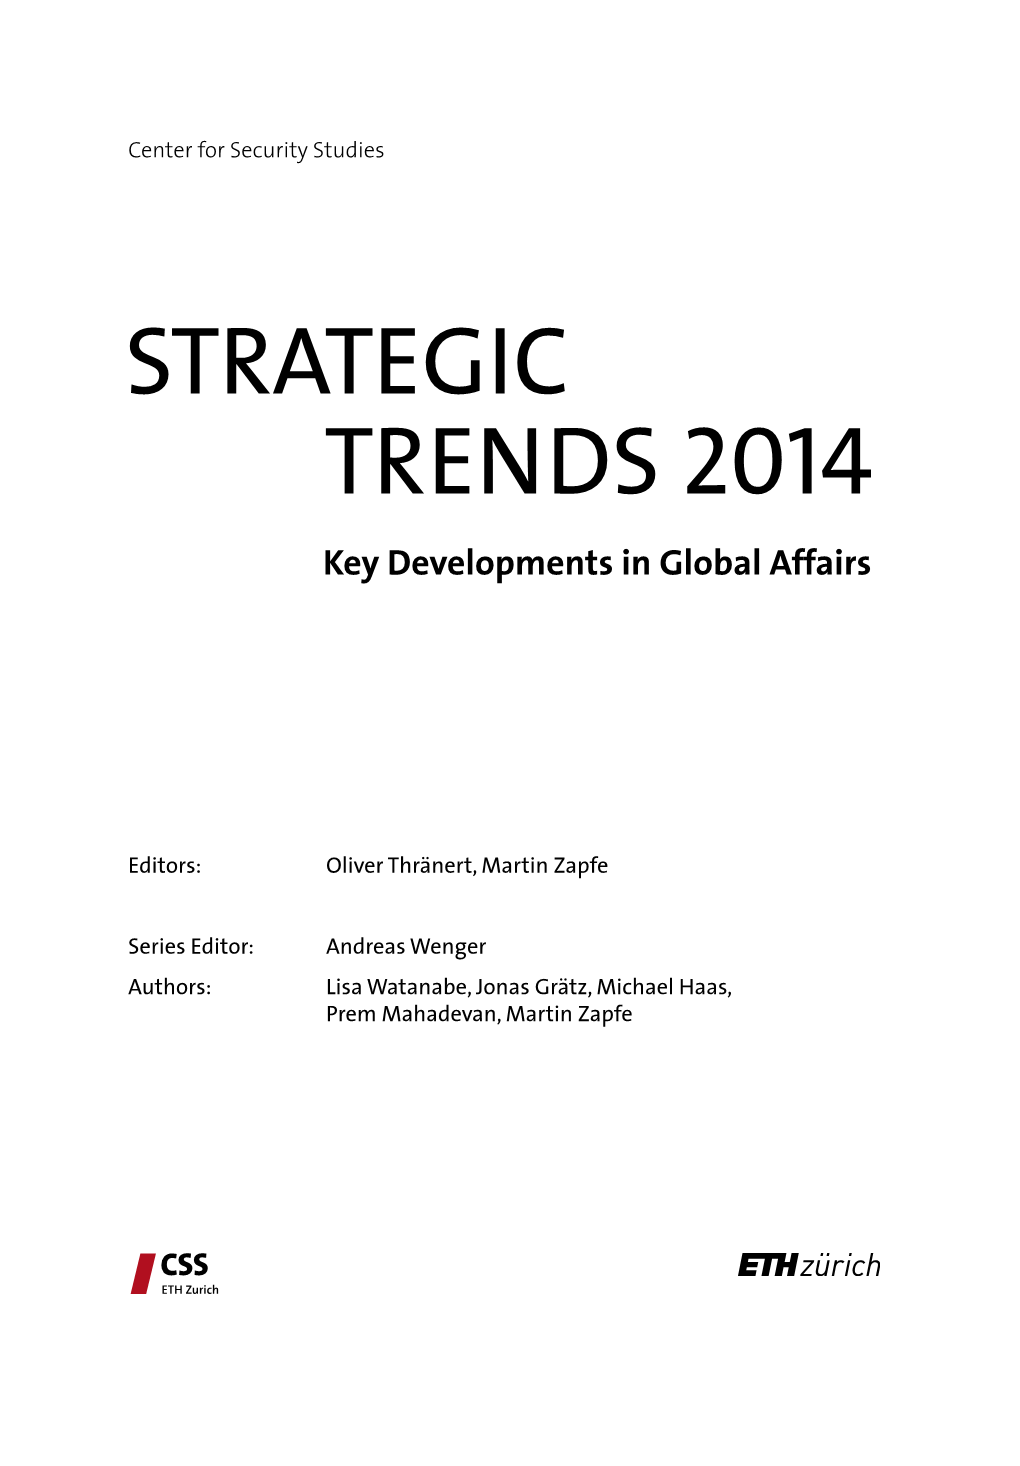 STRATEGIC TRENDS 2014 Key Developments in Global Affairs